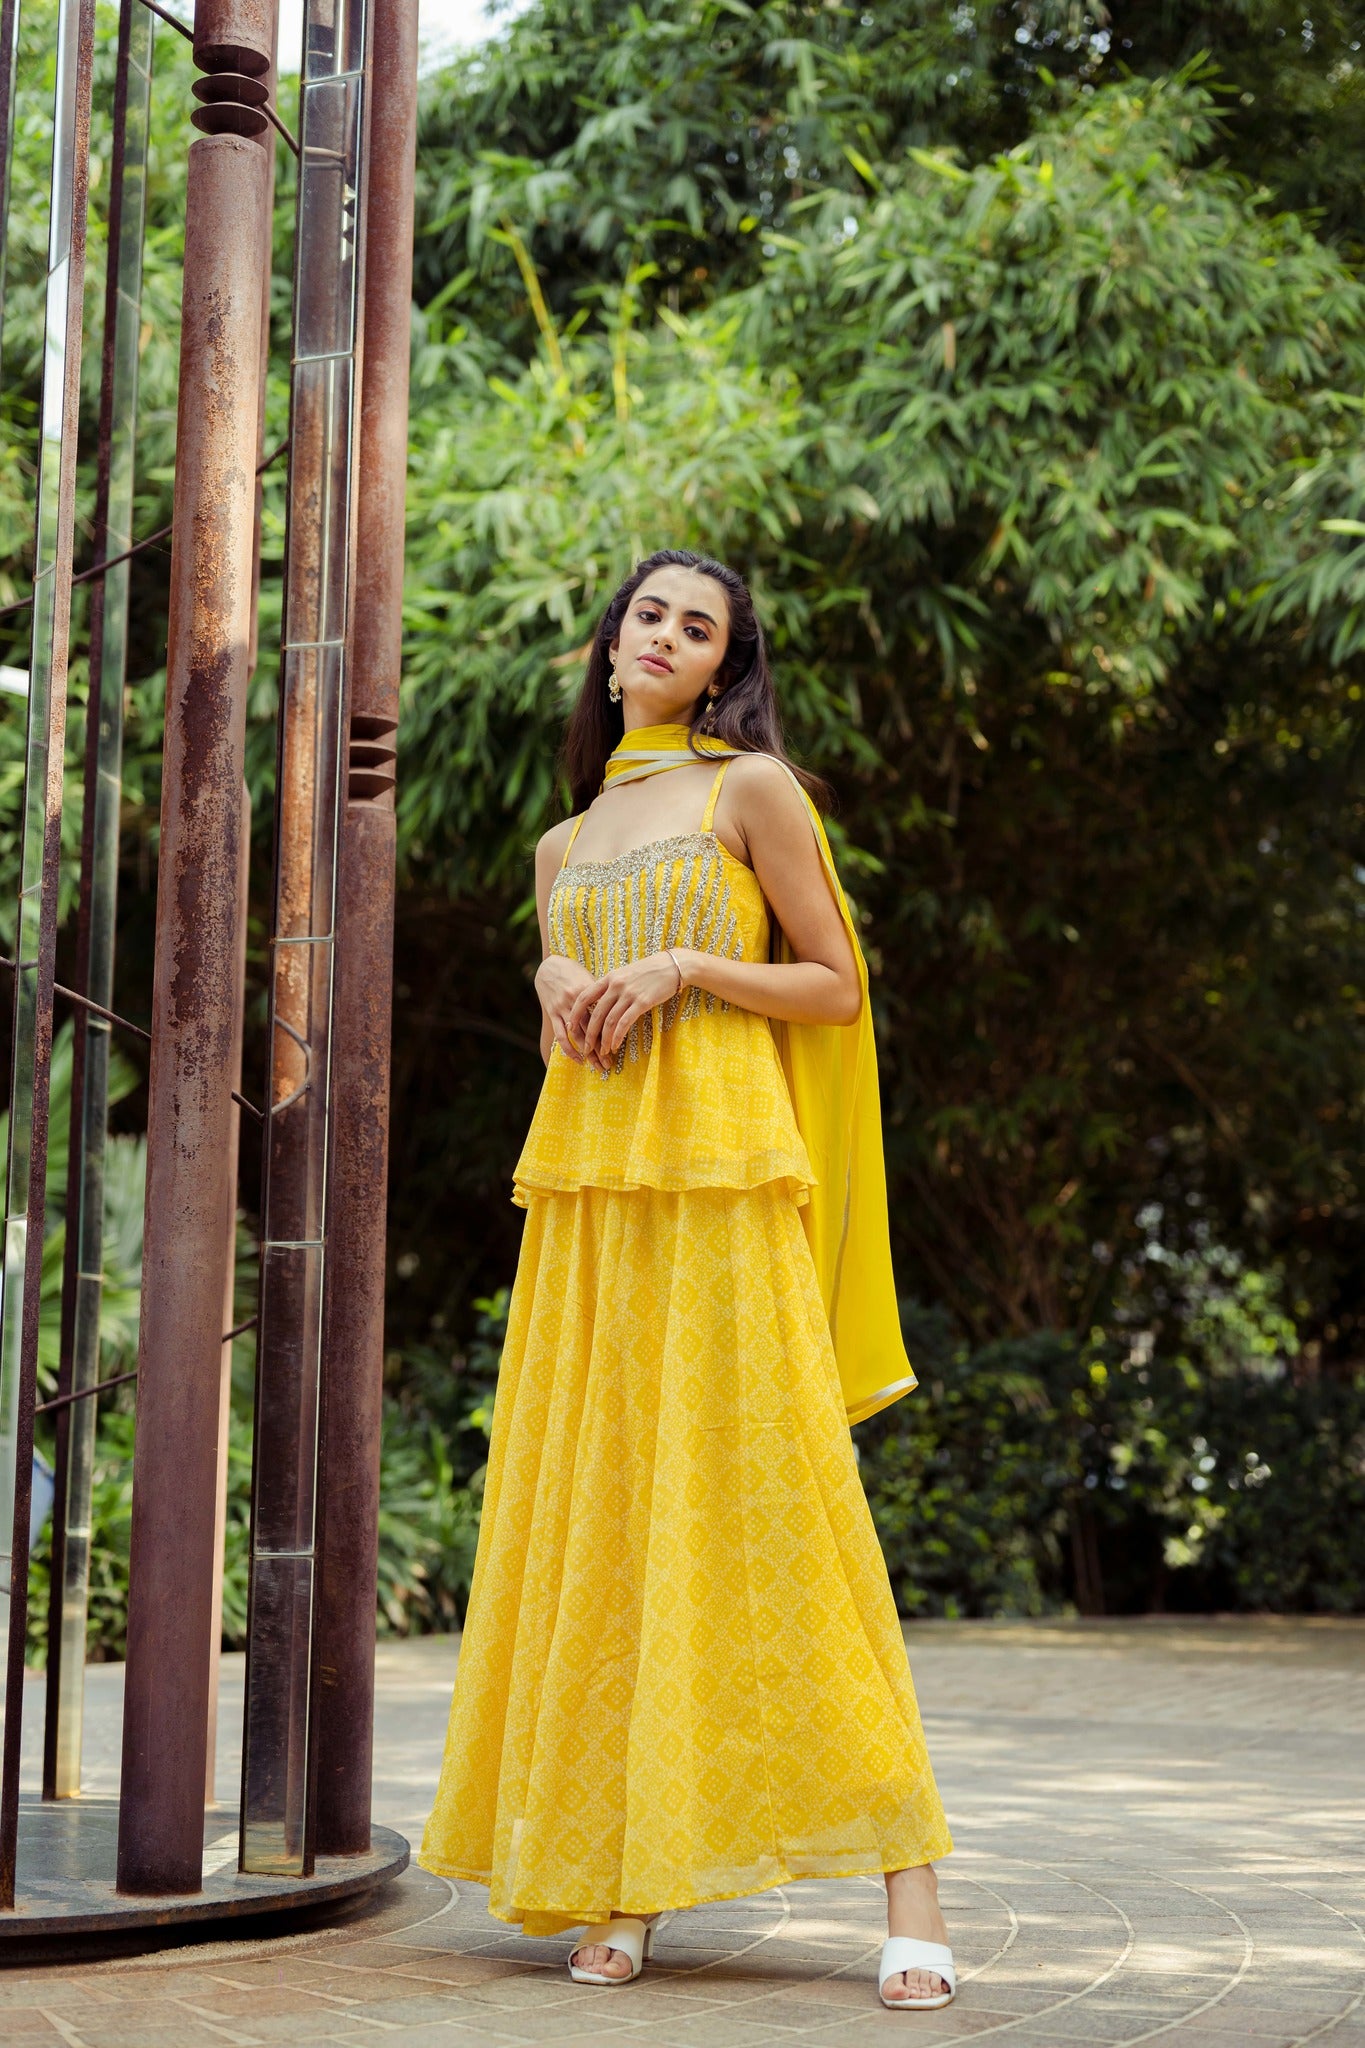 haldi function ke liye beautiful yellow dress design..... latest yellow  dresses!!!! - YouTube